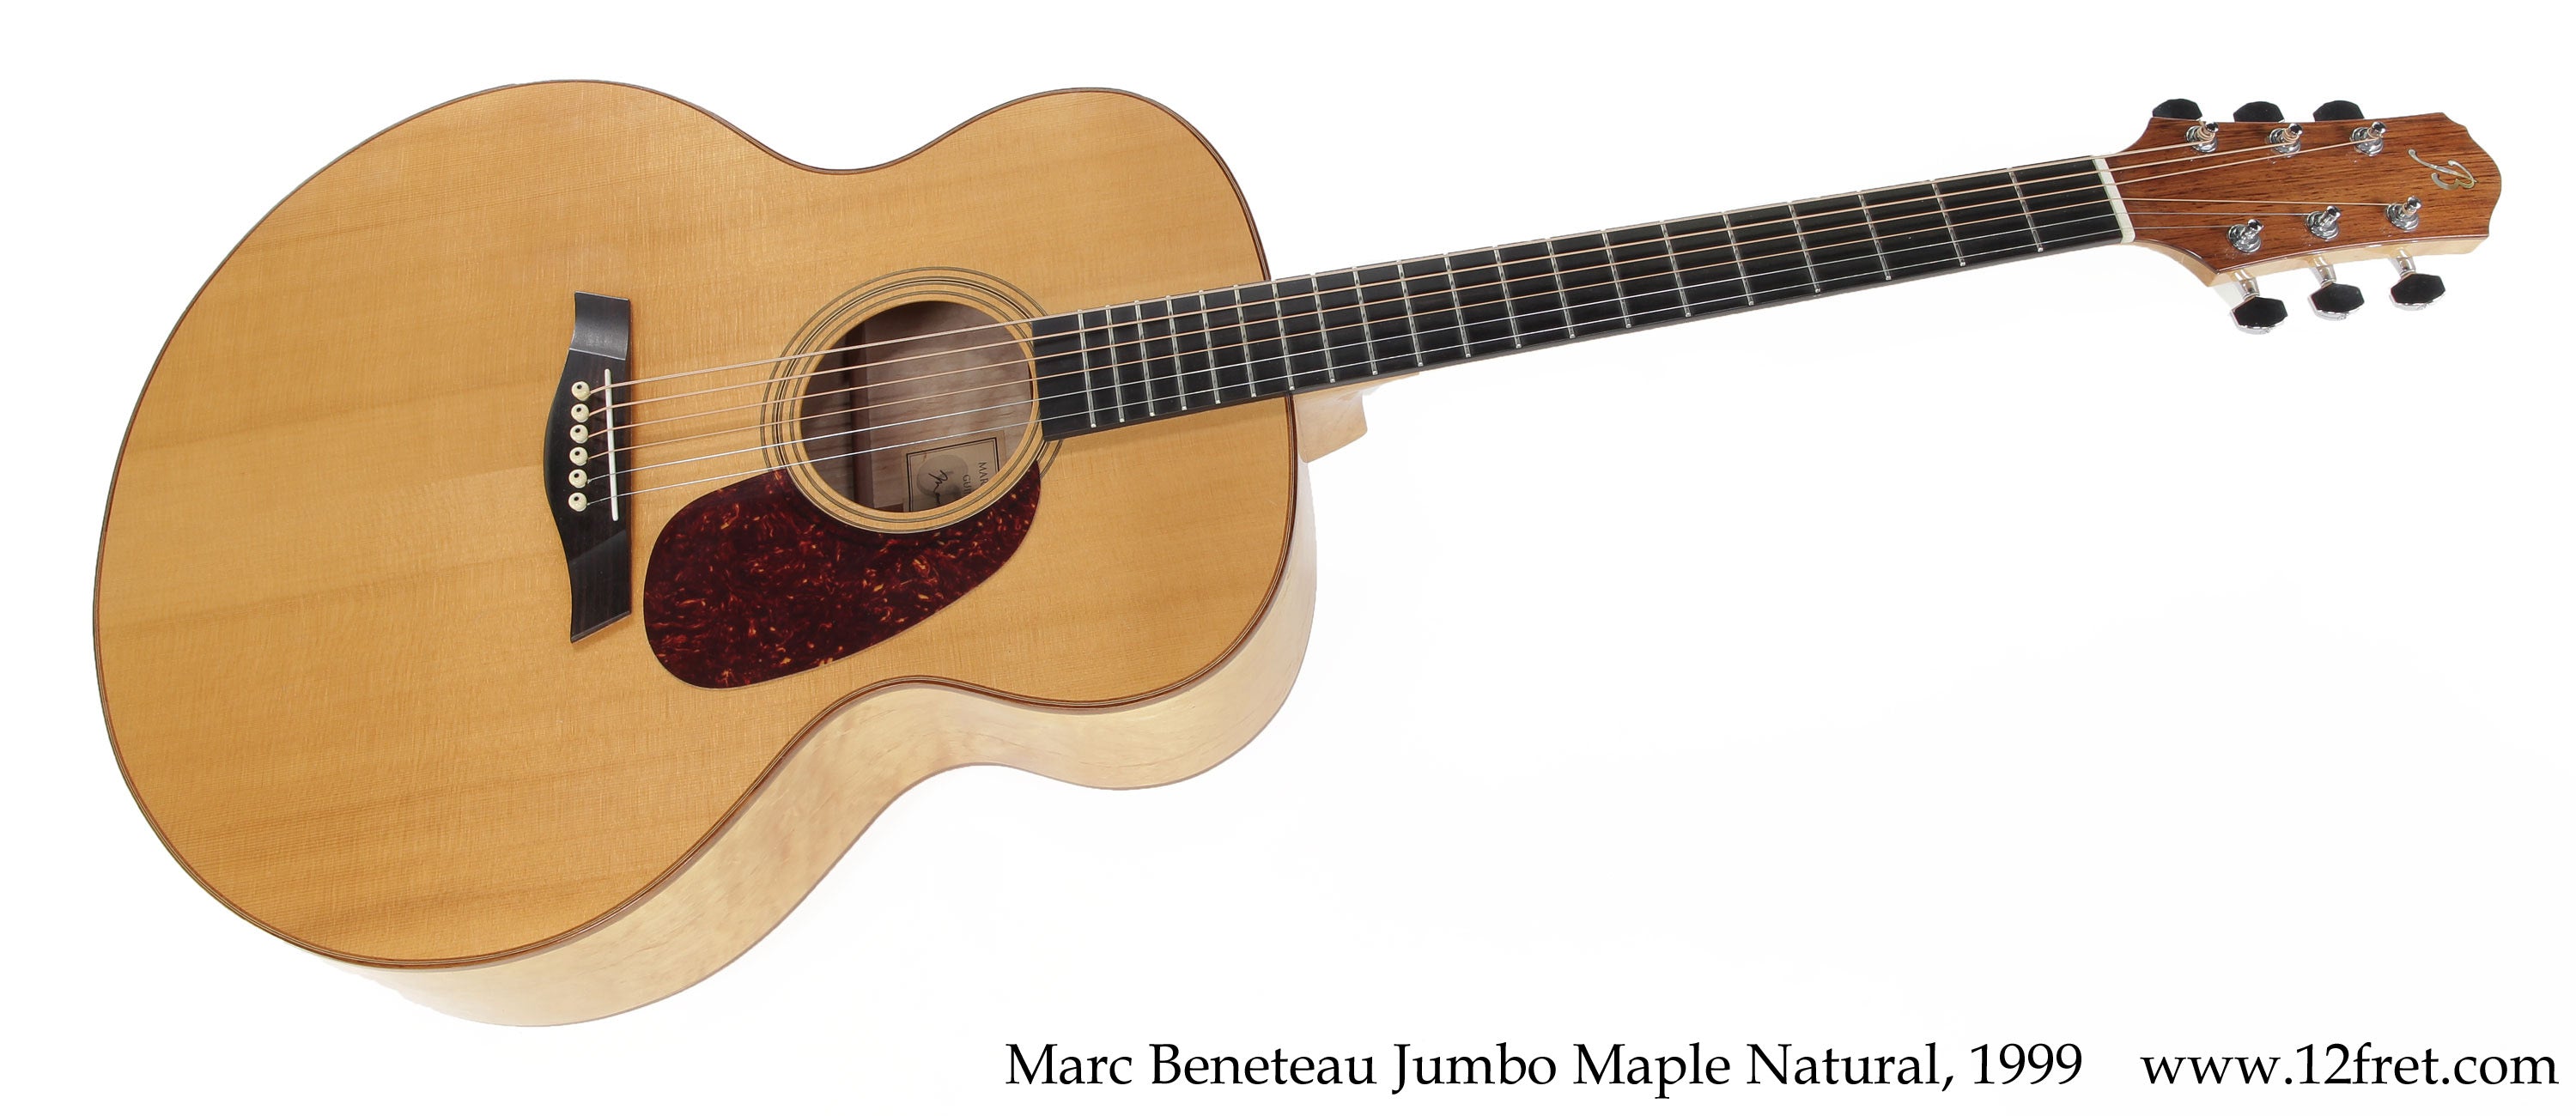 Beneteau Jumbo Maple Natural, 1999  - The Twelfth Fret